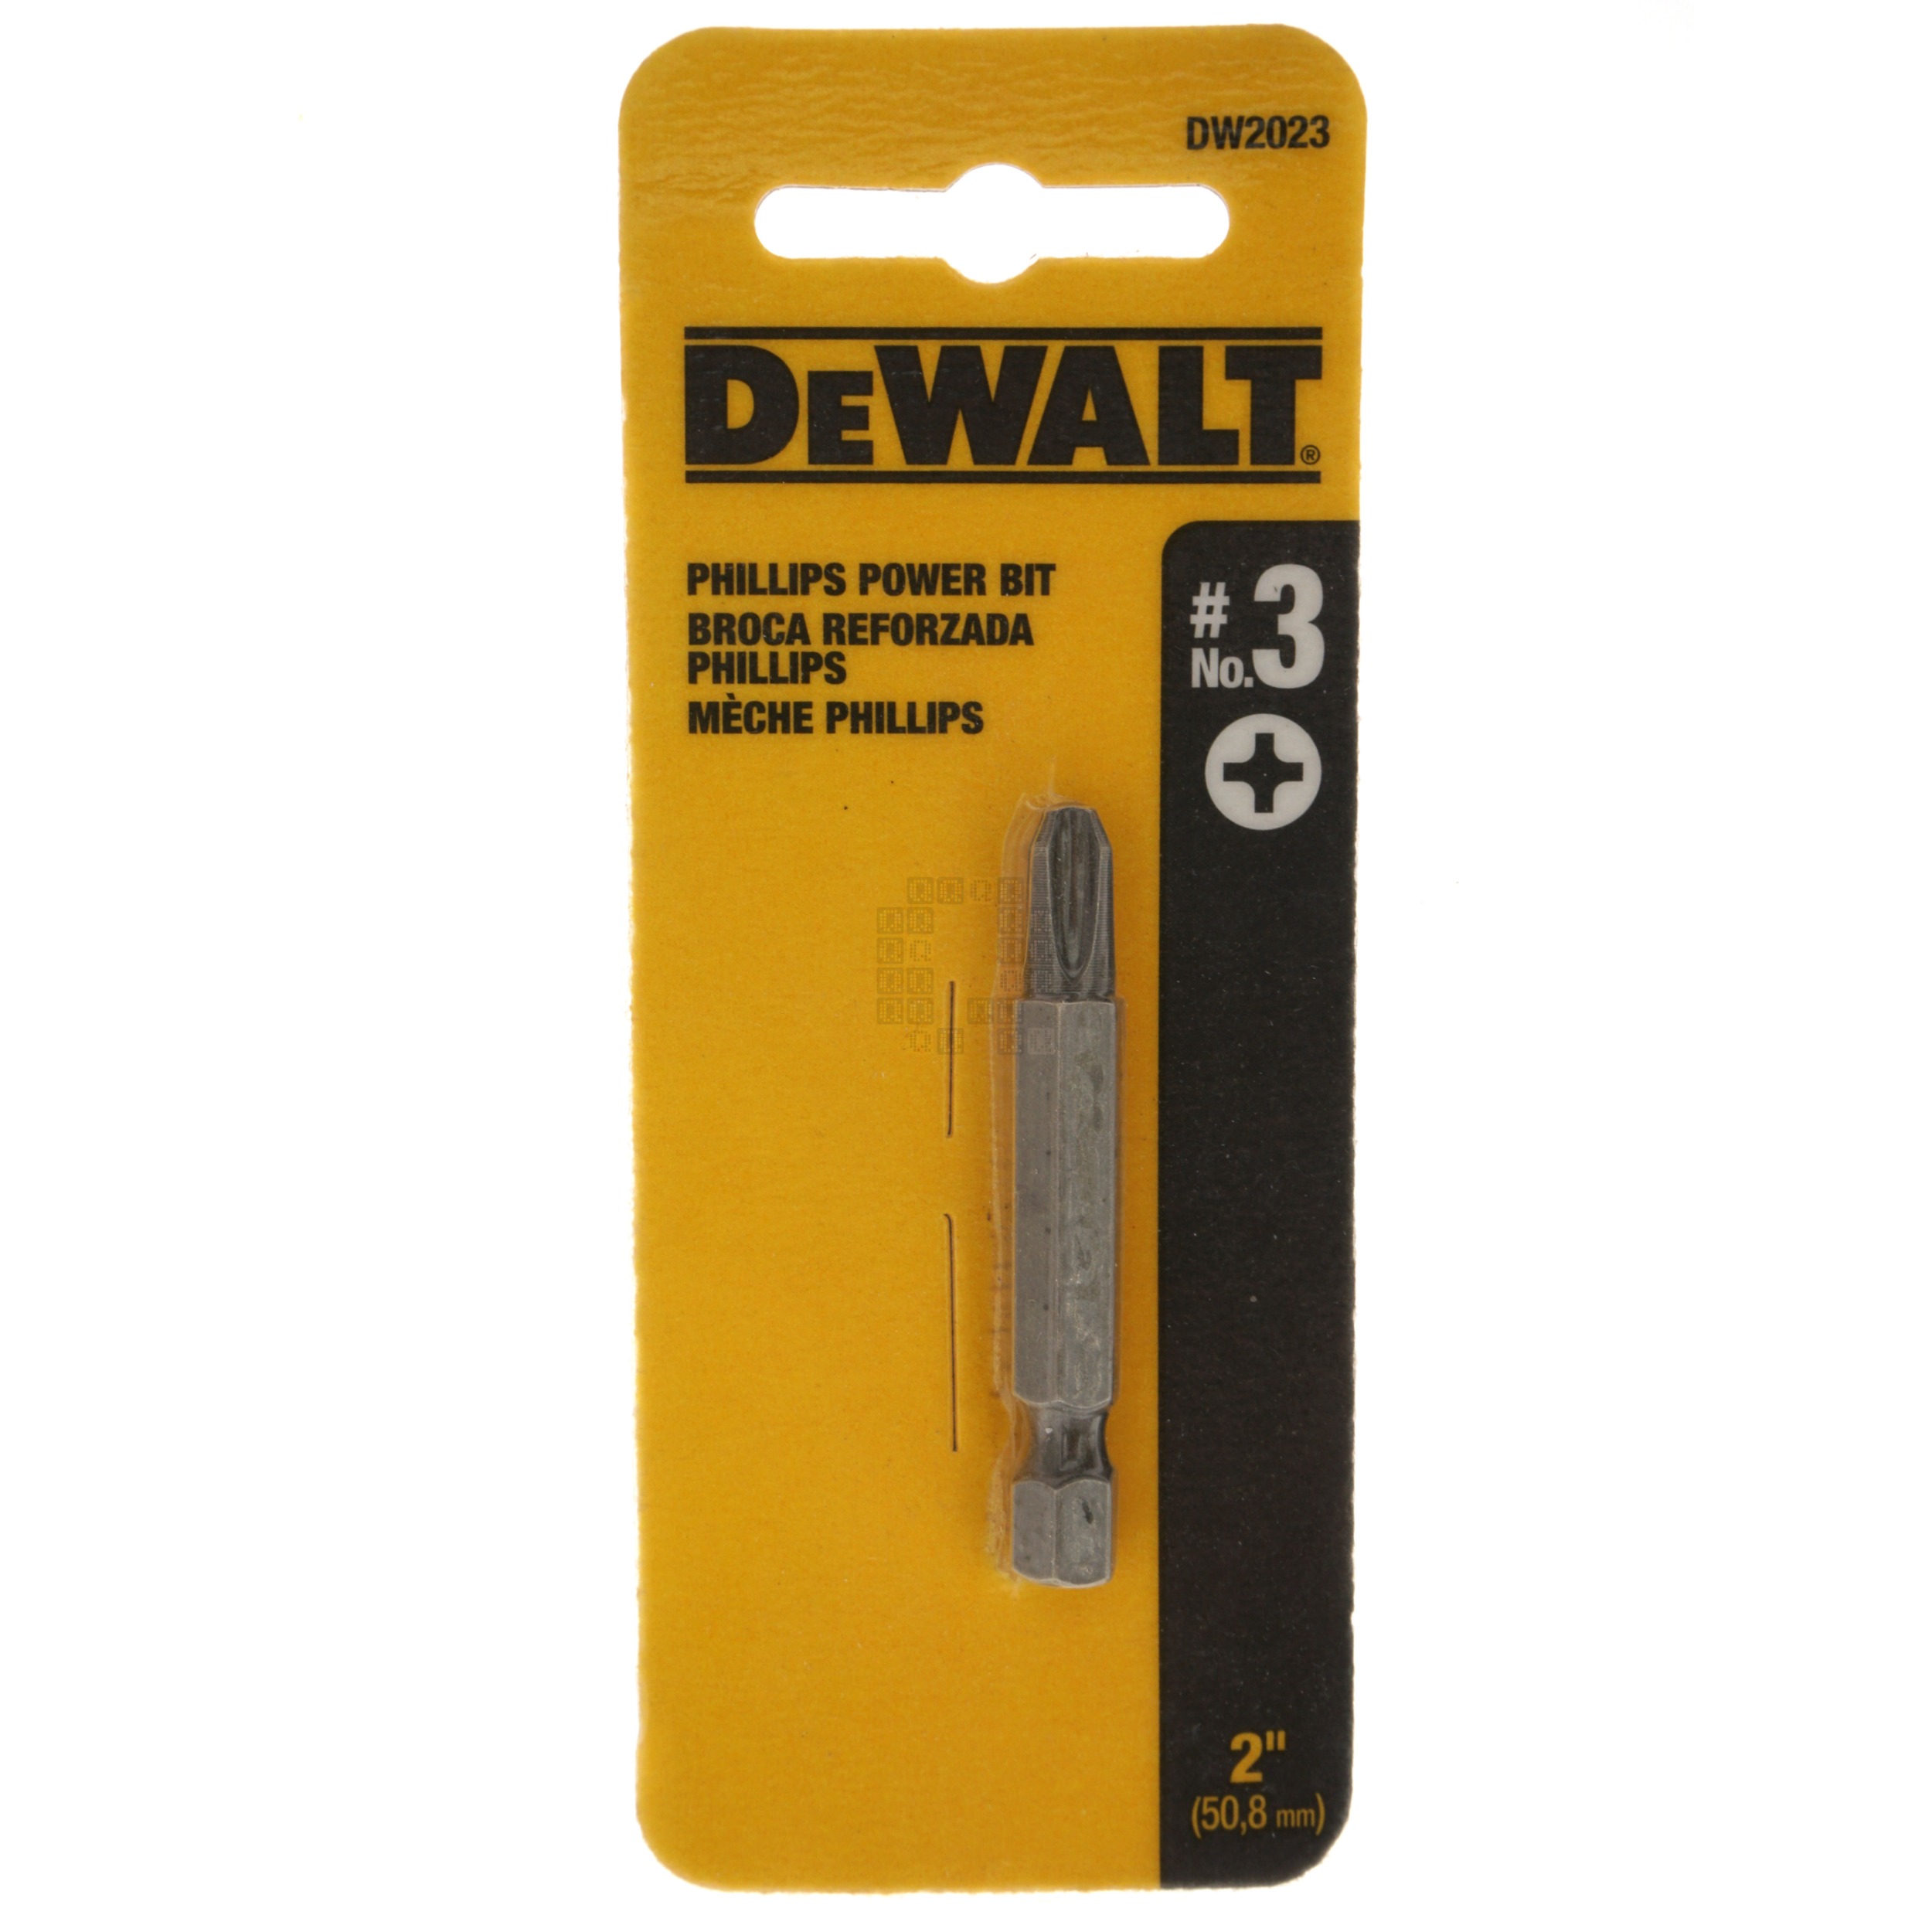 DeWALT DW2023 PH3 #3 Phillips Power Bit, 2" Length